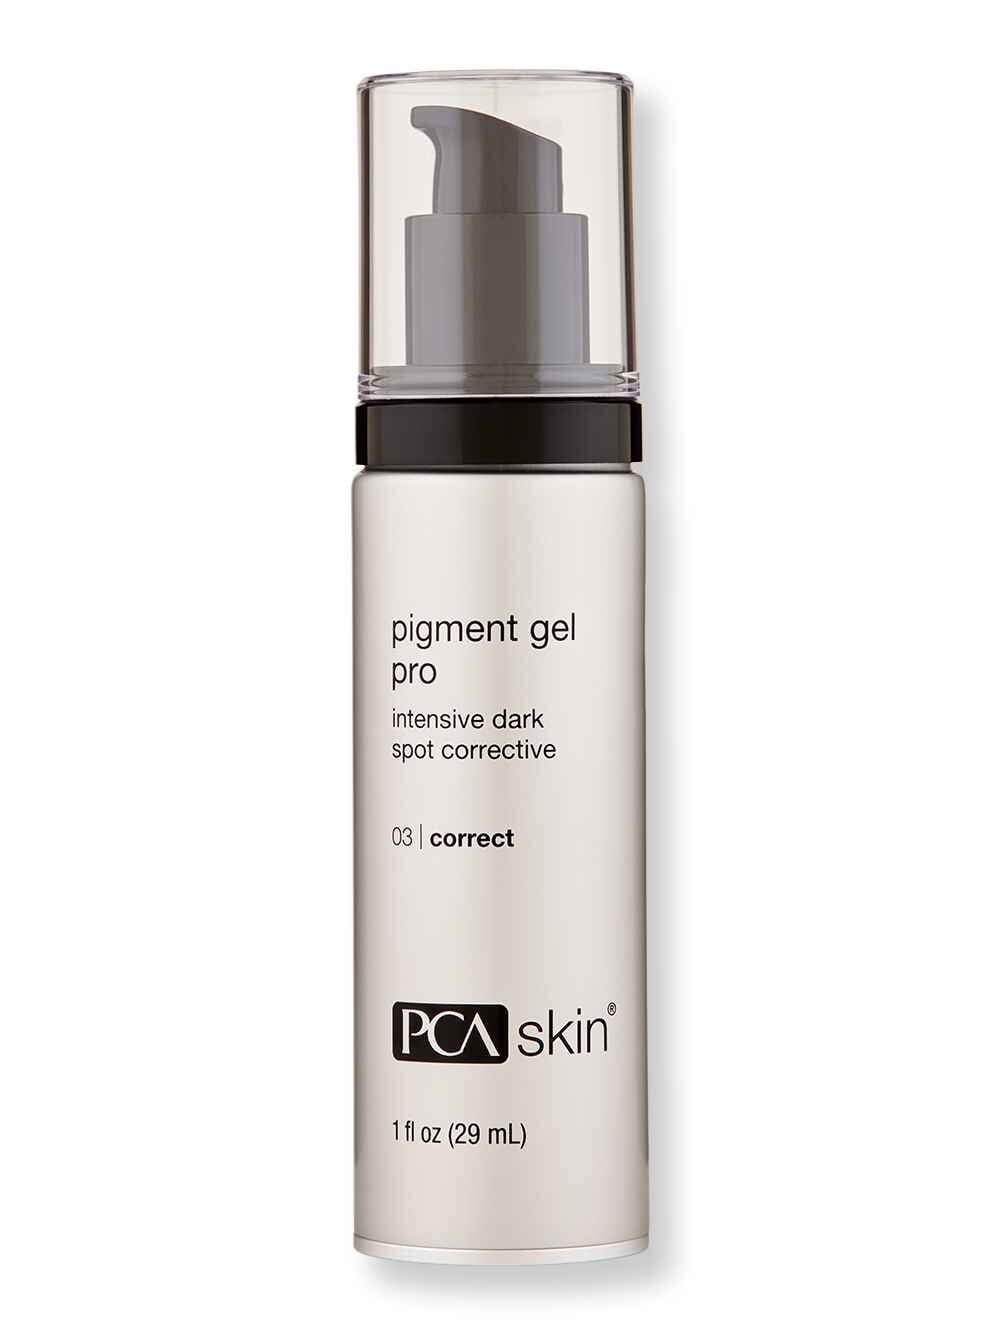 PCA Skin PCA Skin Pigment Gel Pro 1 oz30 ml Skin Care Treatments 